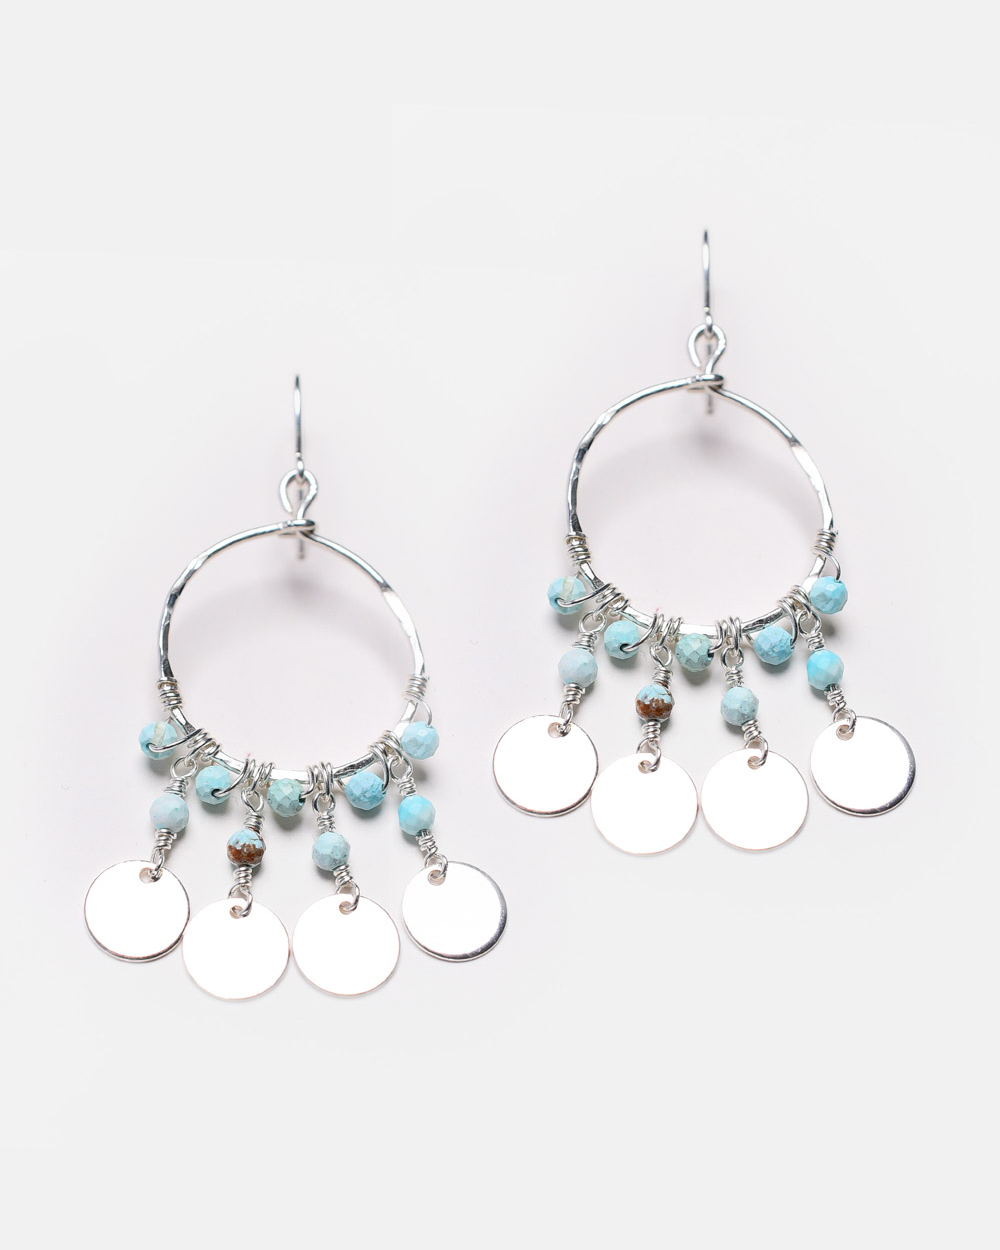 925 sterling silver hoop earrings with semi-precious stones